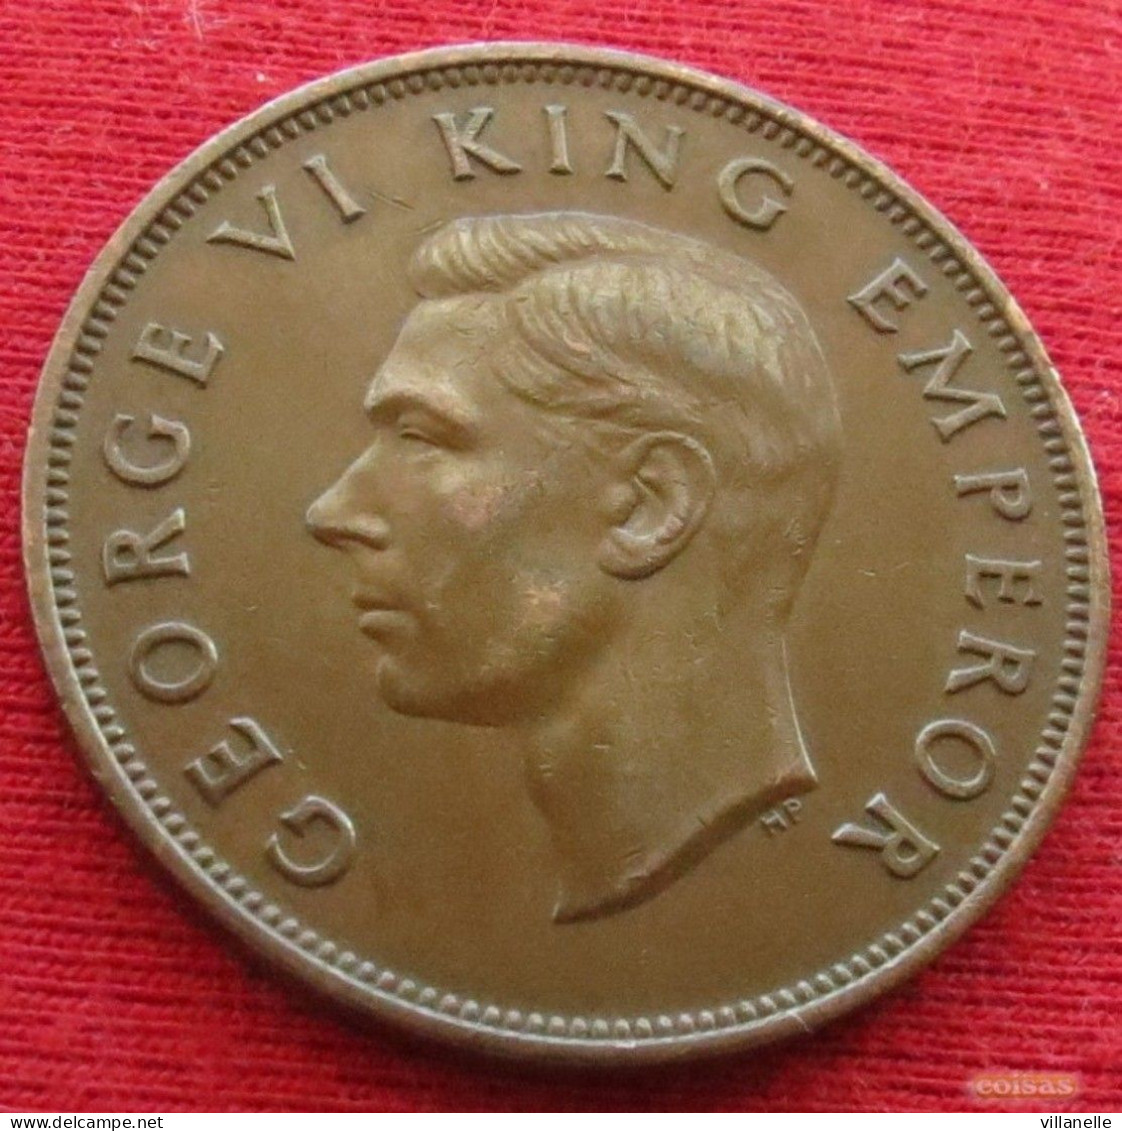 New Zealand 1 One Penny 1947 KM# 13 *V1T Nova Zelandia Nuova Zelanda Nouvelle Zelande - New Zealand